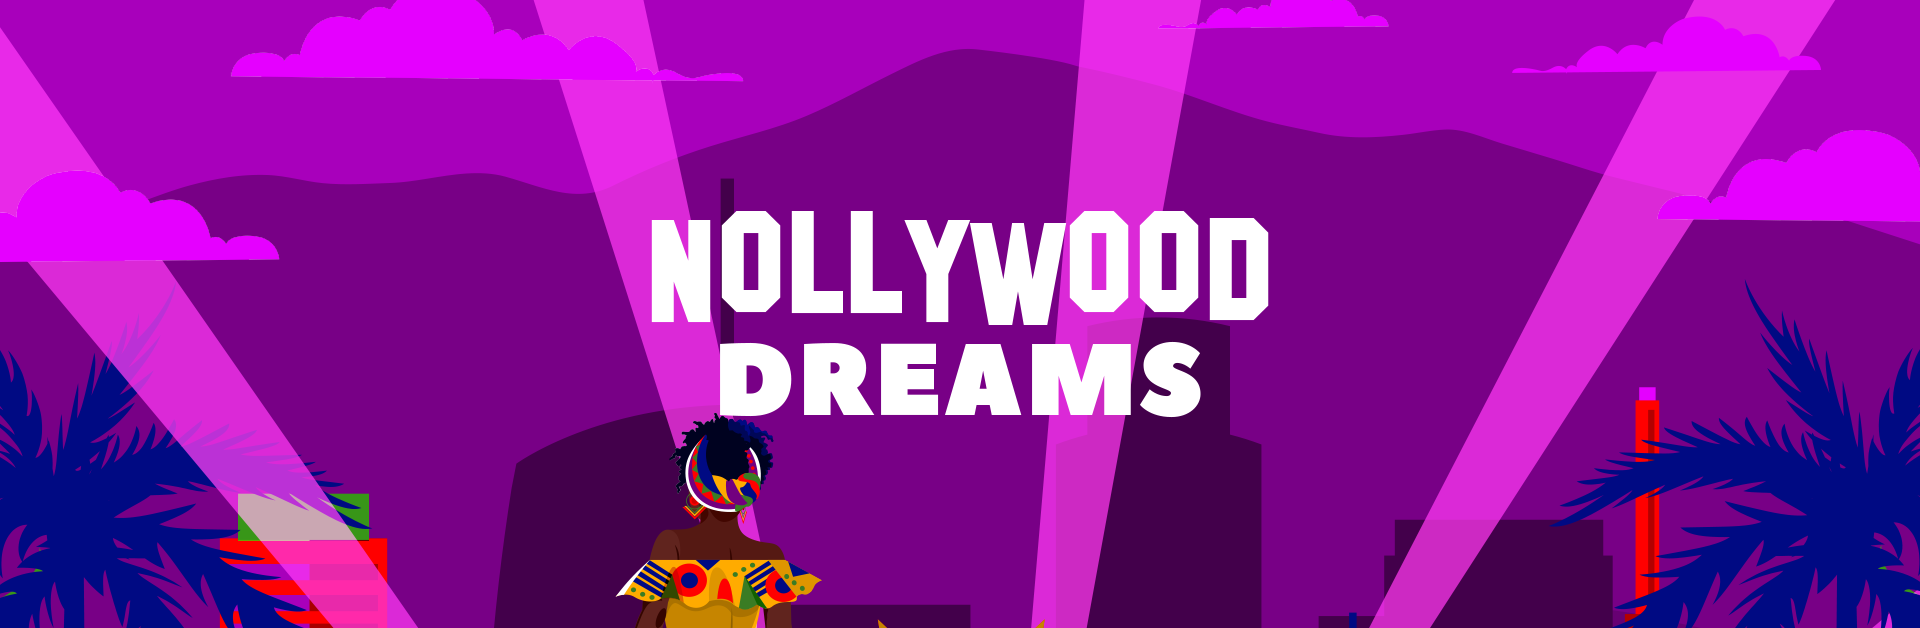 Nollywood Dreams Play Poster